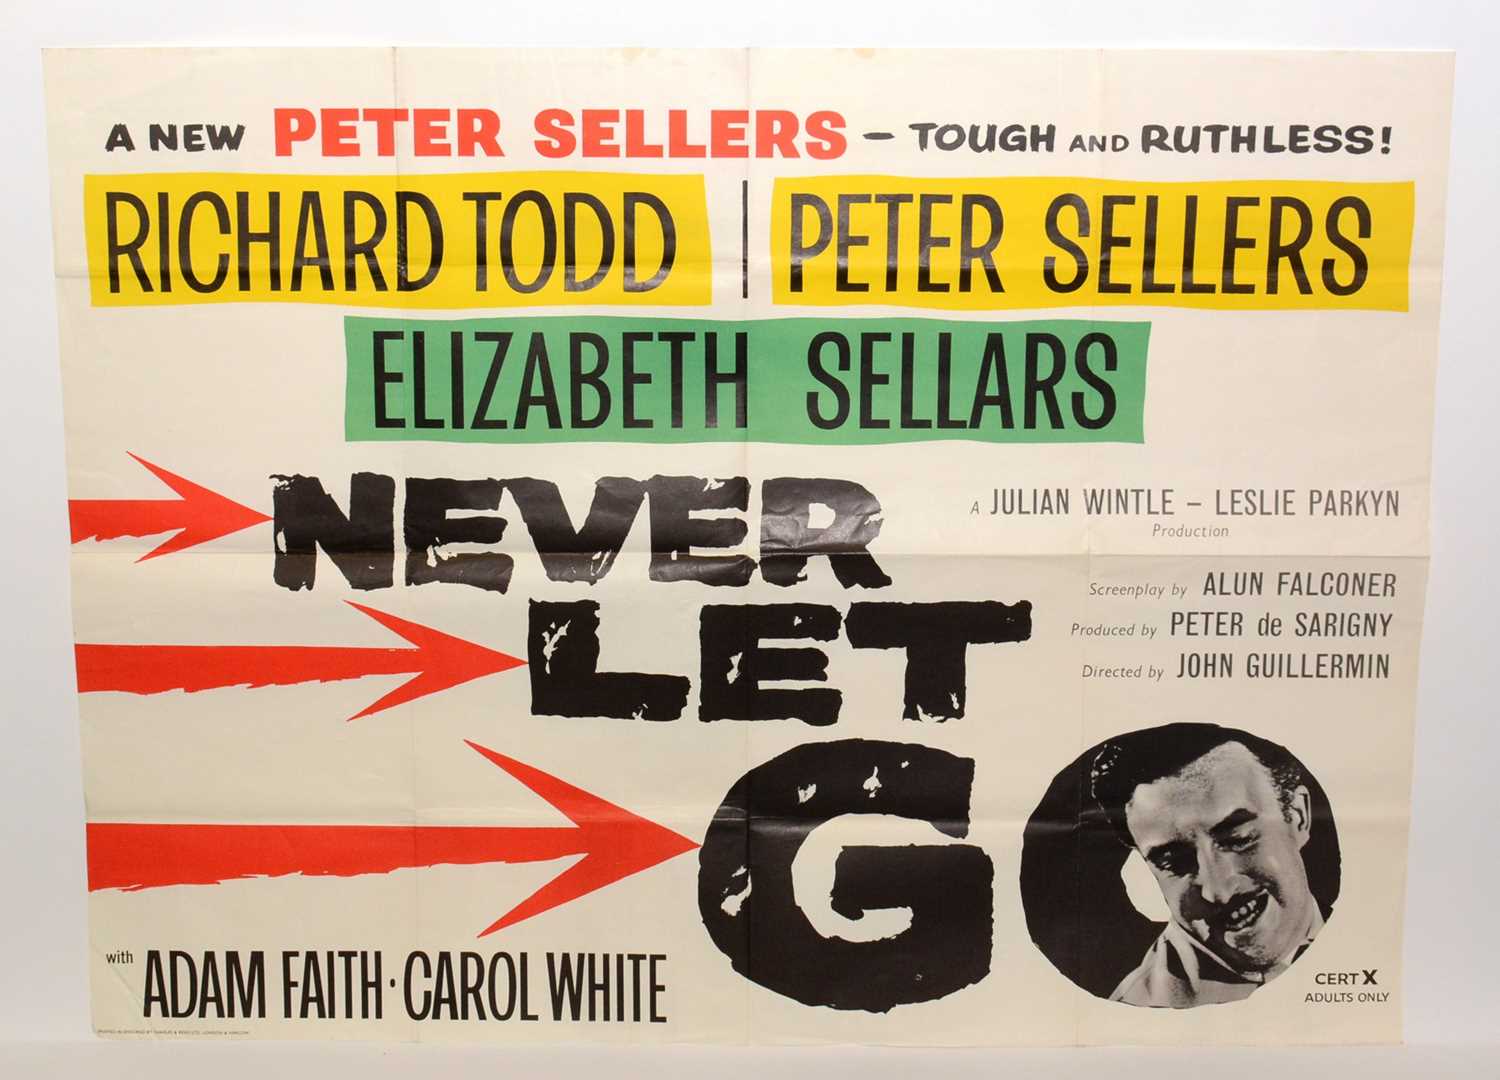 Lot 1281 - British quad movie poster for "Never Let Go"